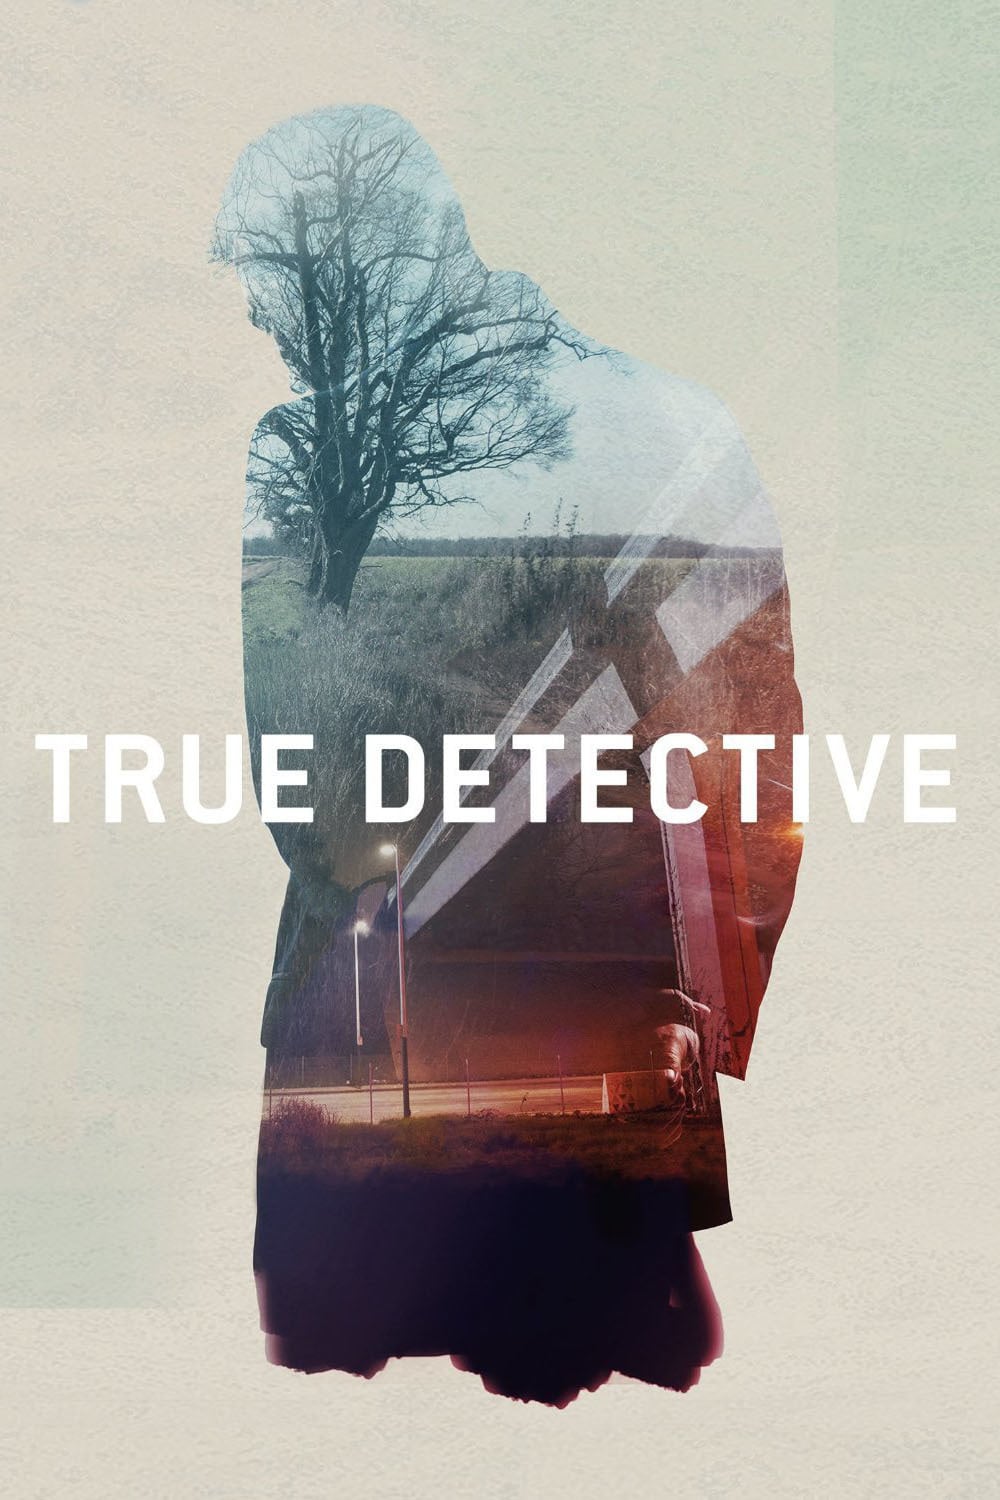 True Detective rating